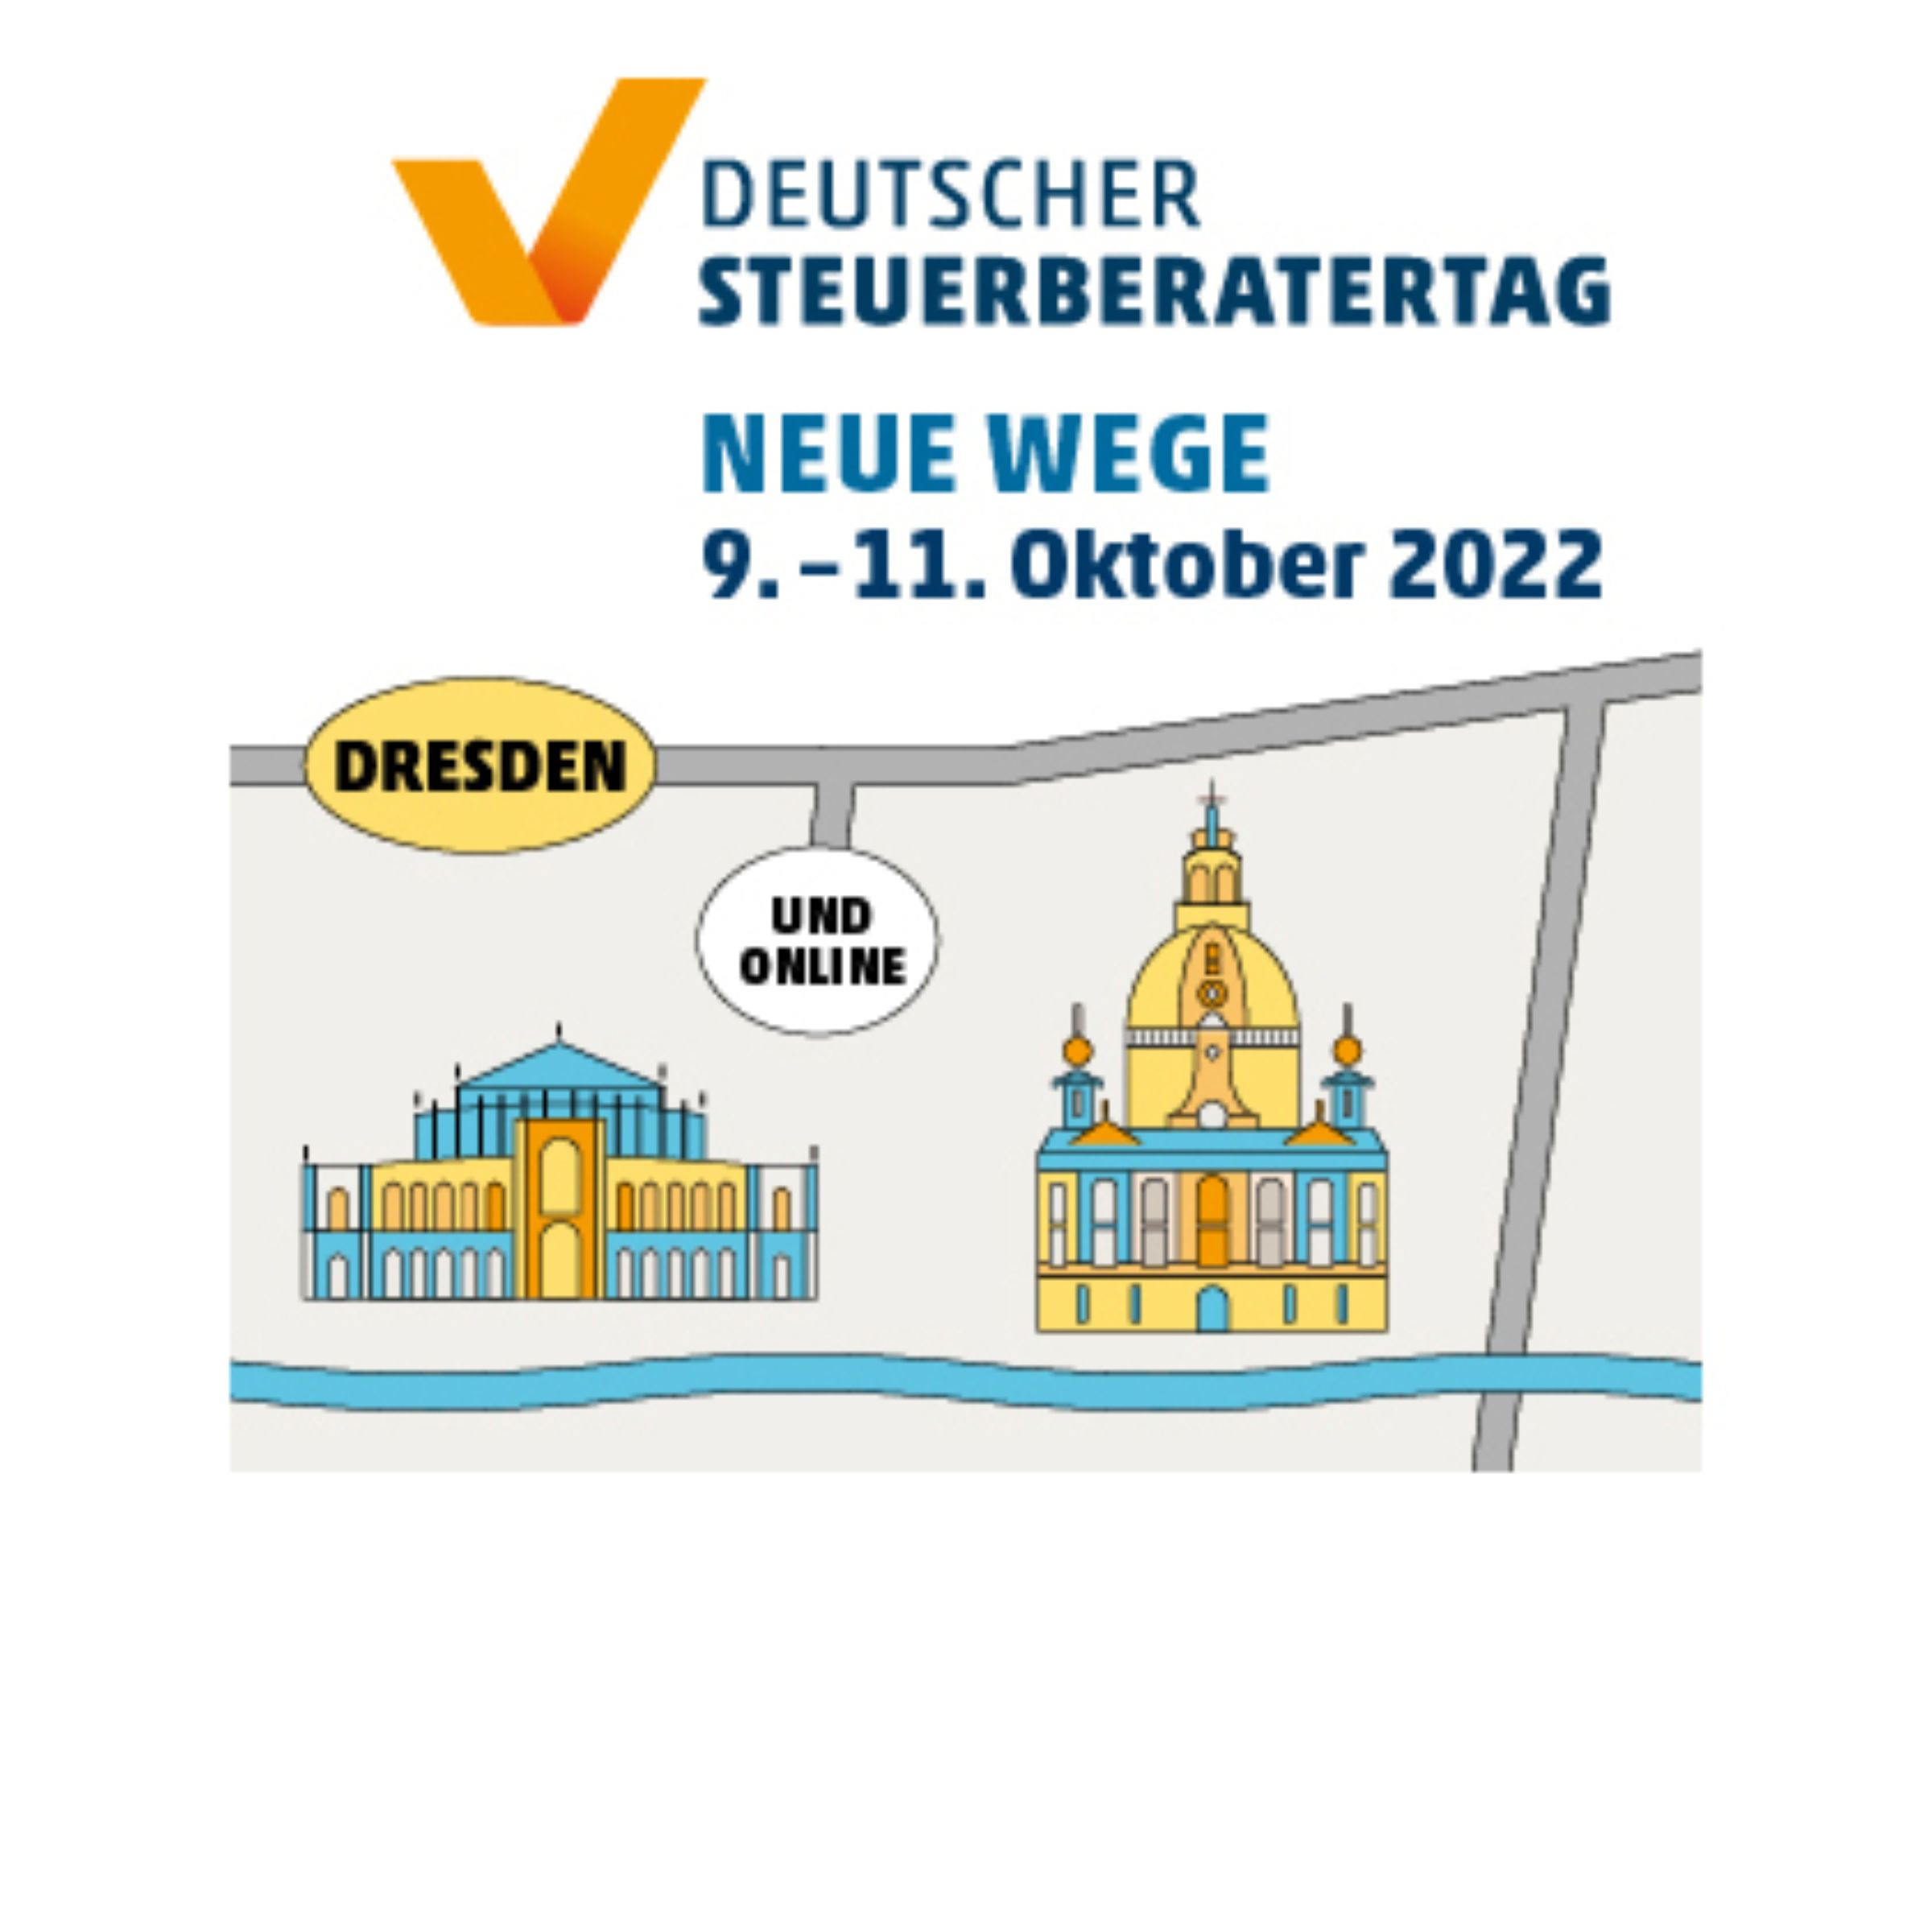 Deutscher Steuerberatertag 2022